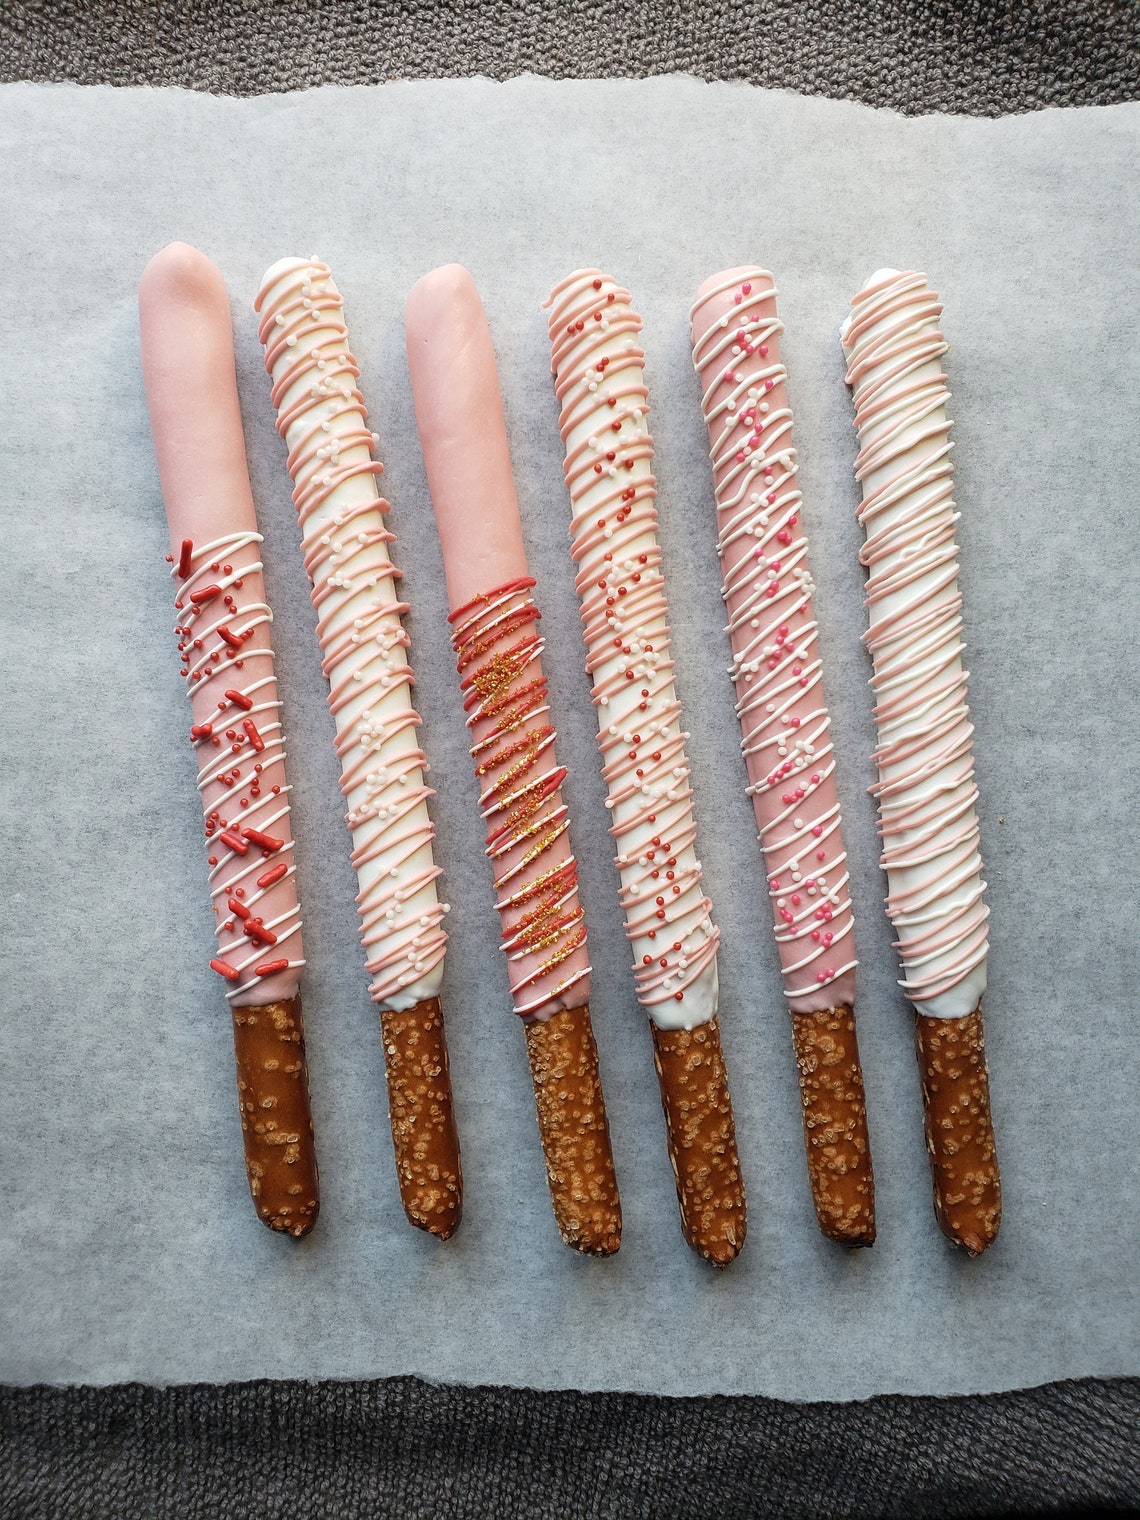 Chocolate Covered Pretzels 3 Sticks Pink White Gourmet | Etsy